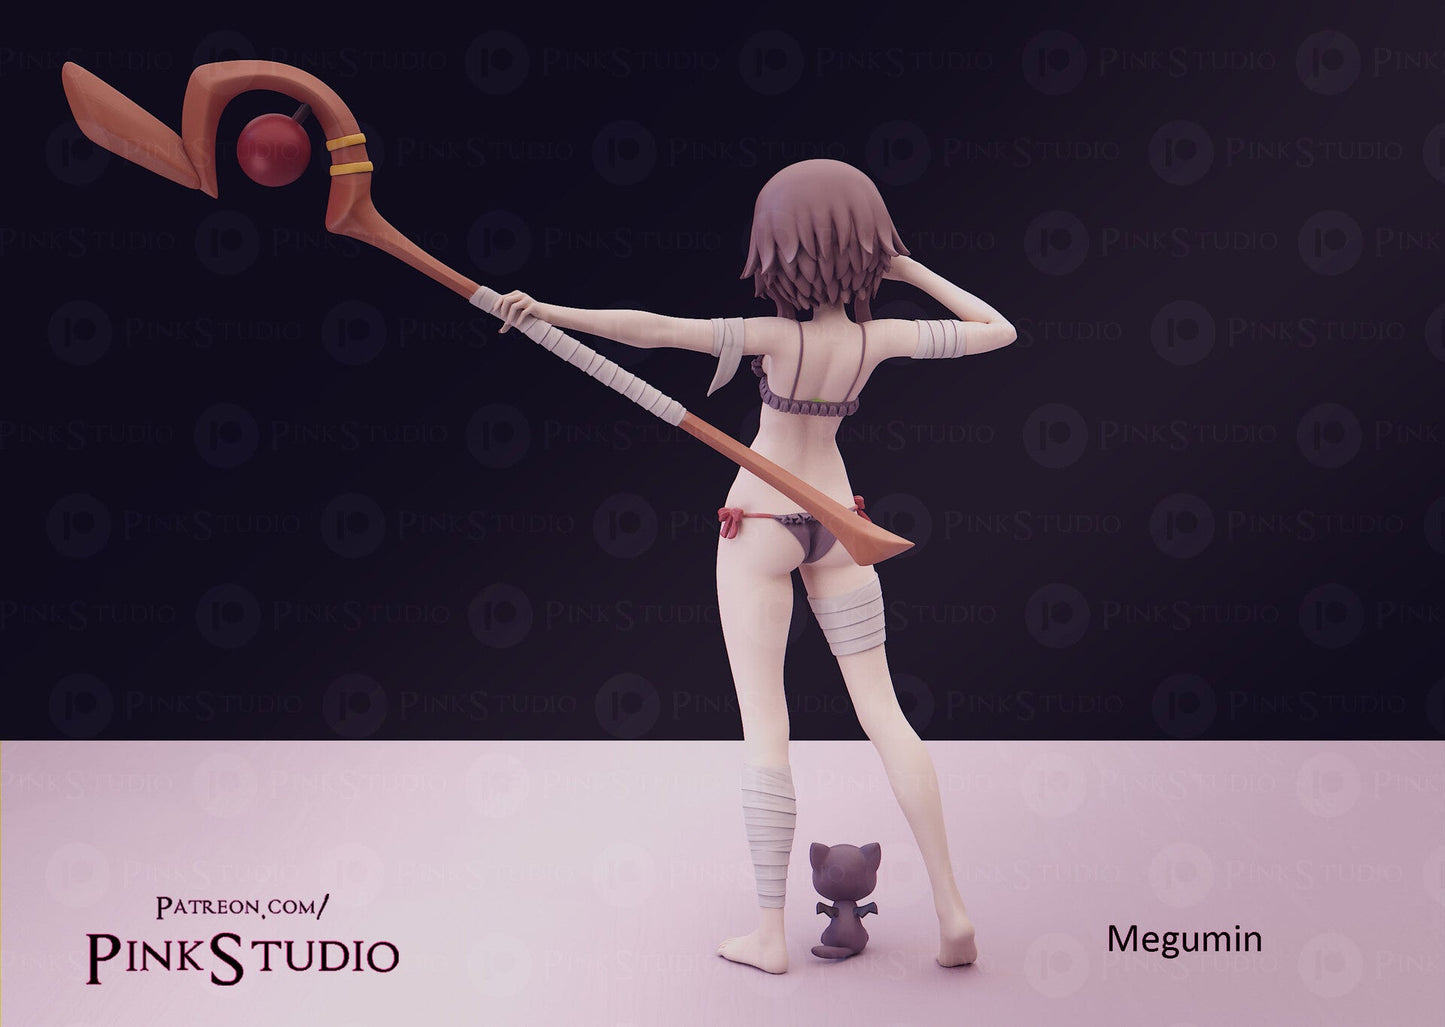 Megumin NSFW 3D Printed Anime Miniature Fanart by Pink Studio